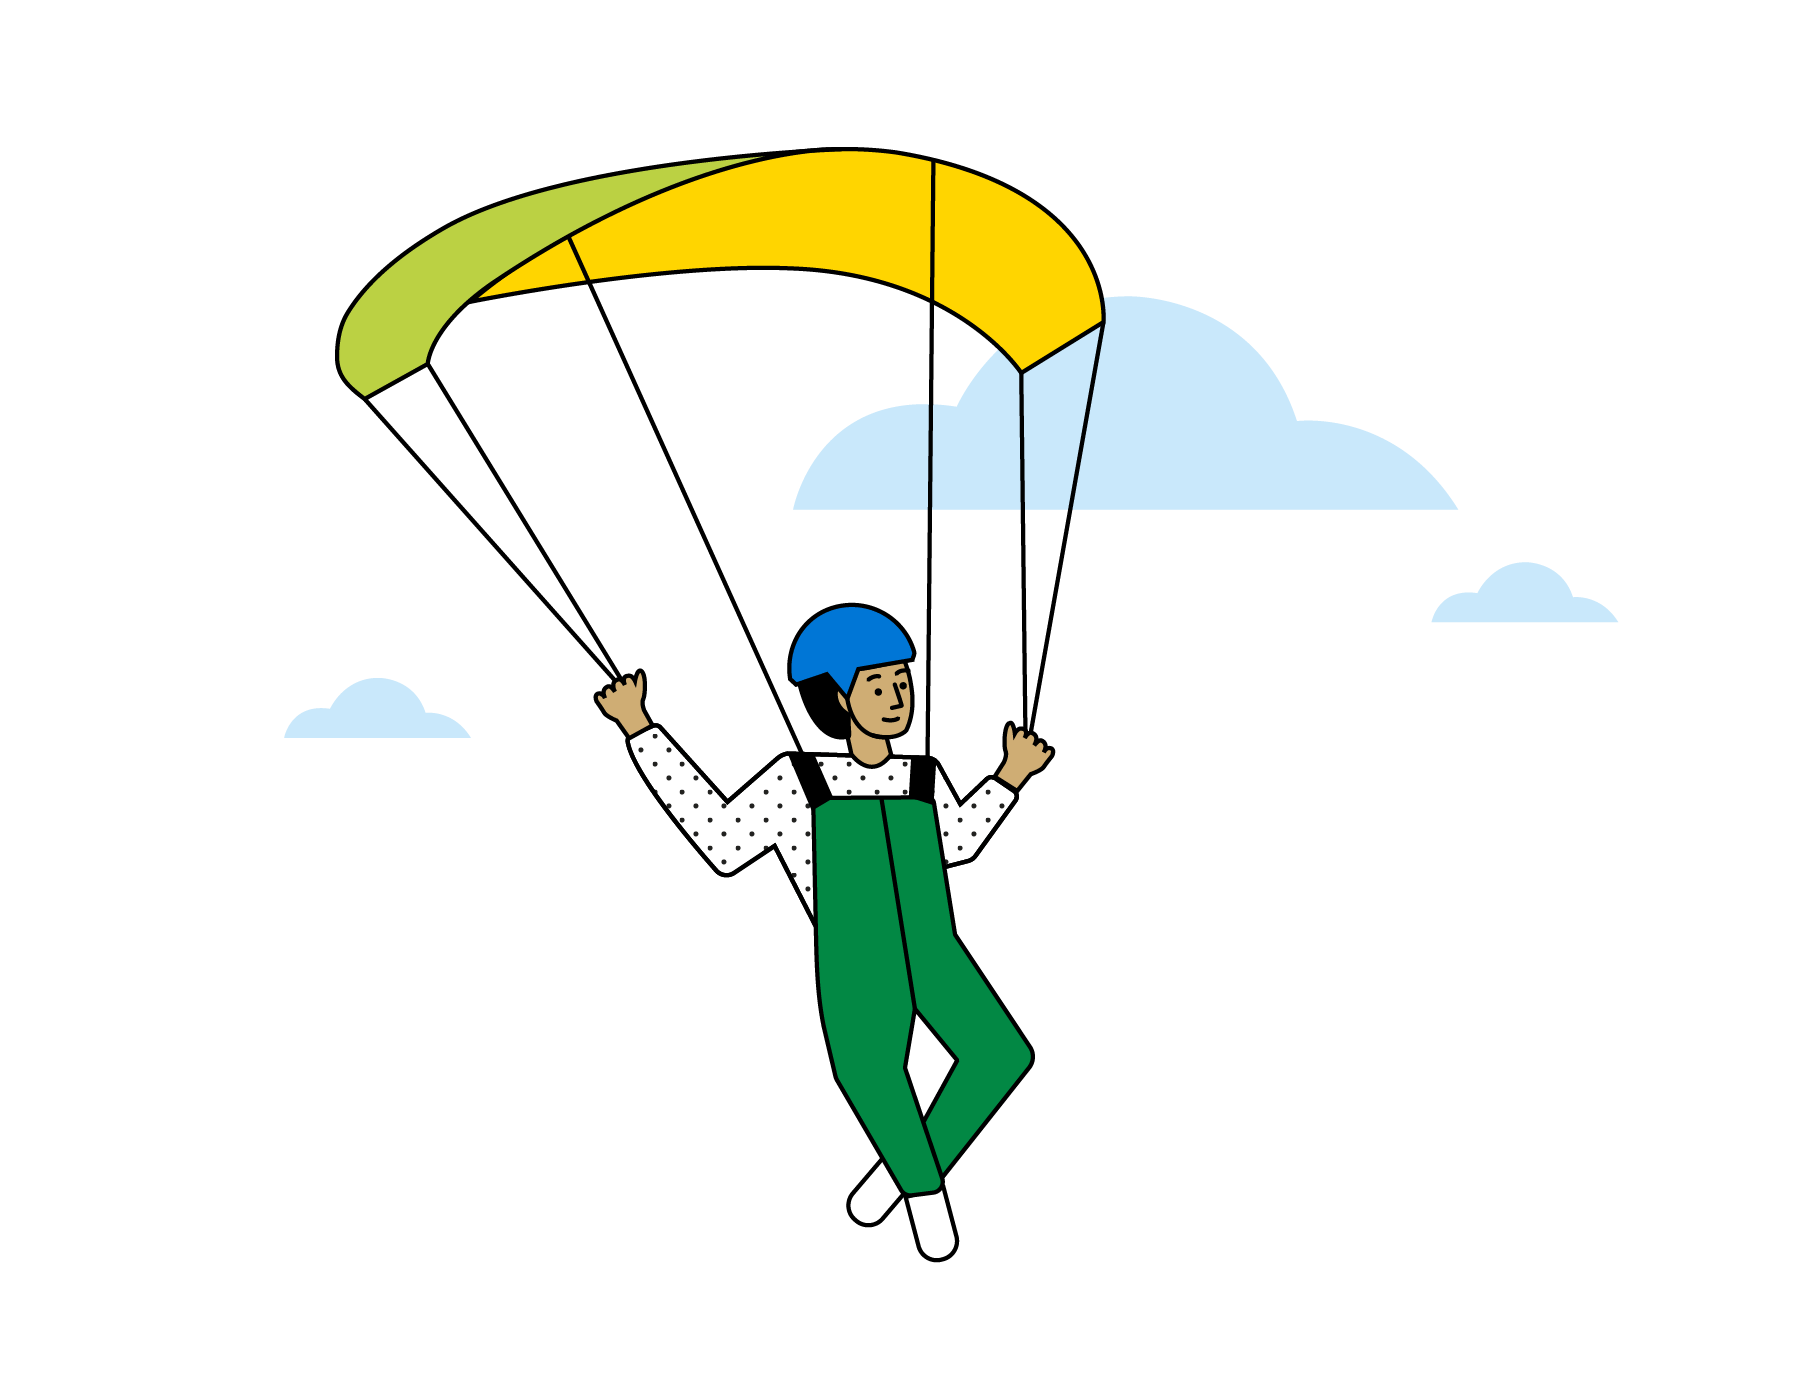 hang-glider-over-mountains-illustration